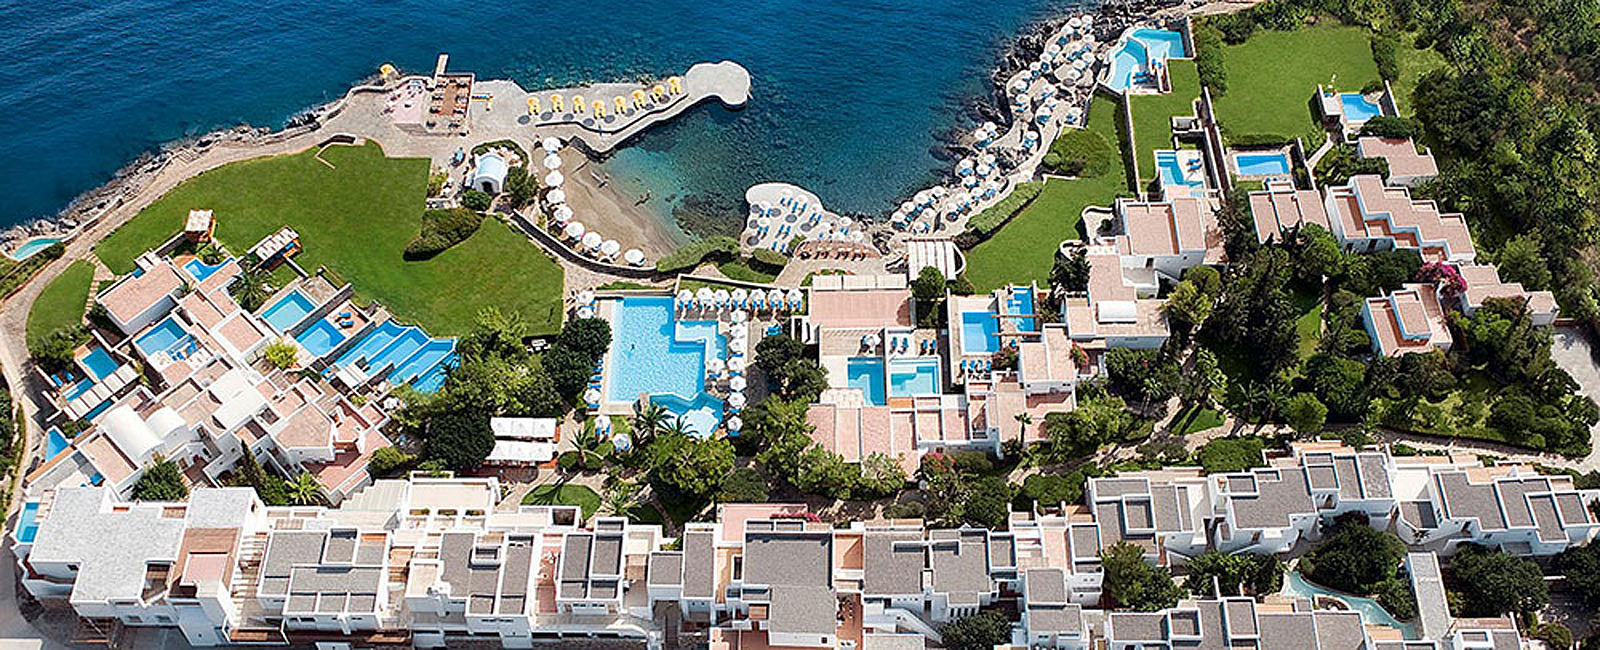 HOTEL ANGEBOTE
 St. Nicolas Bay Resort: -30% 
